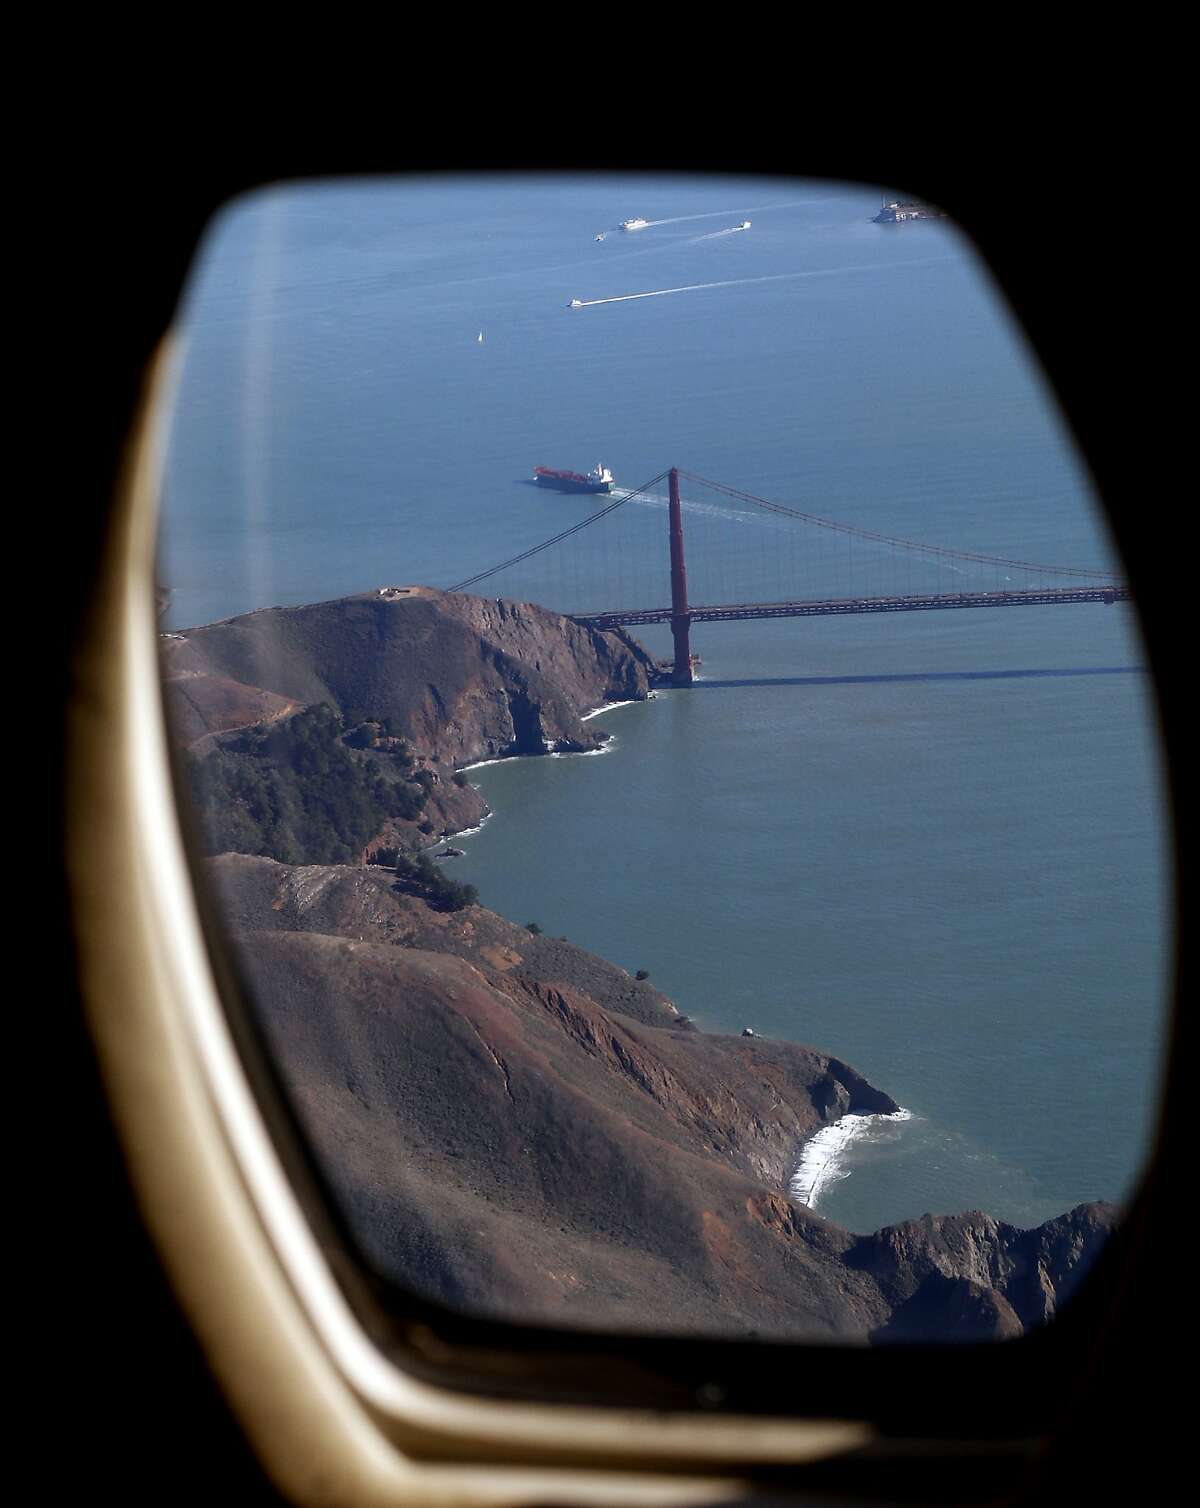 An XOJET Cessna Citation X flies over San Francisco, Calif., on Monday, January 13, 2014.